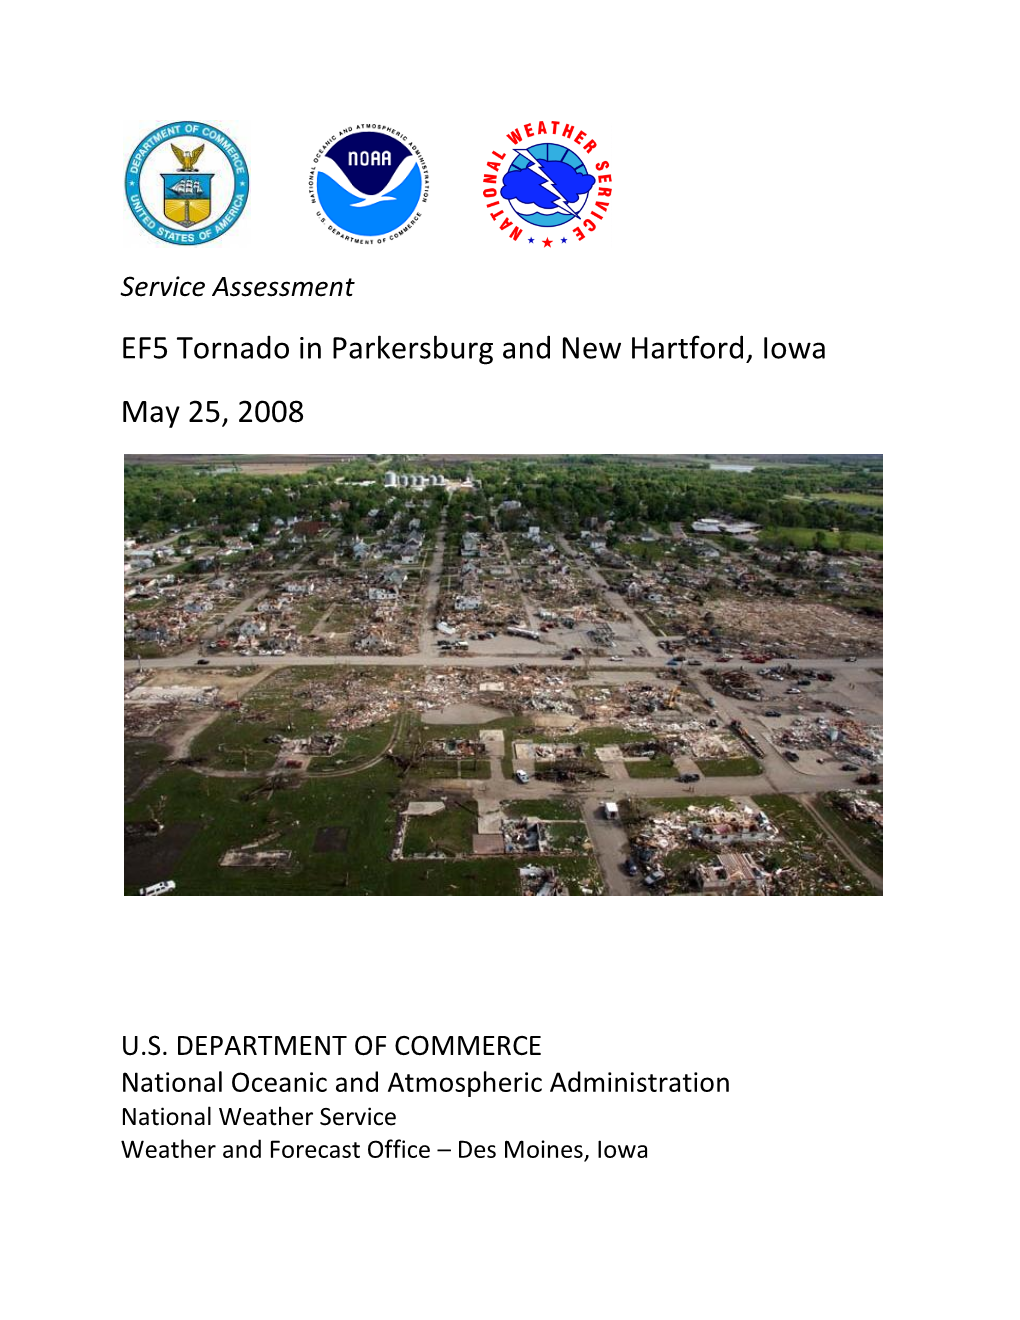 EF5 Tornado in Parkersburg and New Hartford, Iowa May 25, 2008